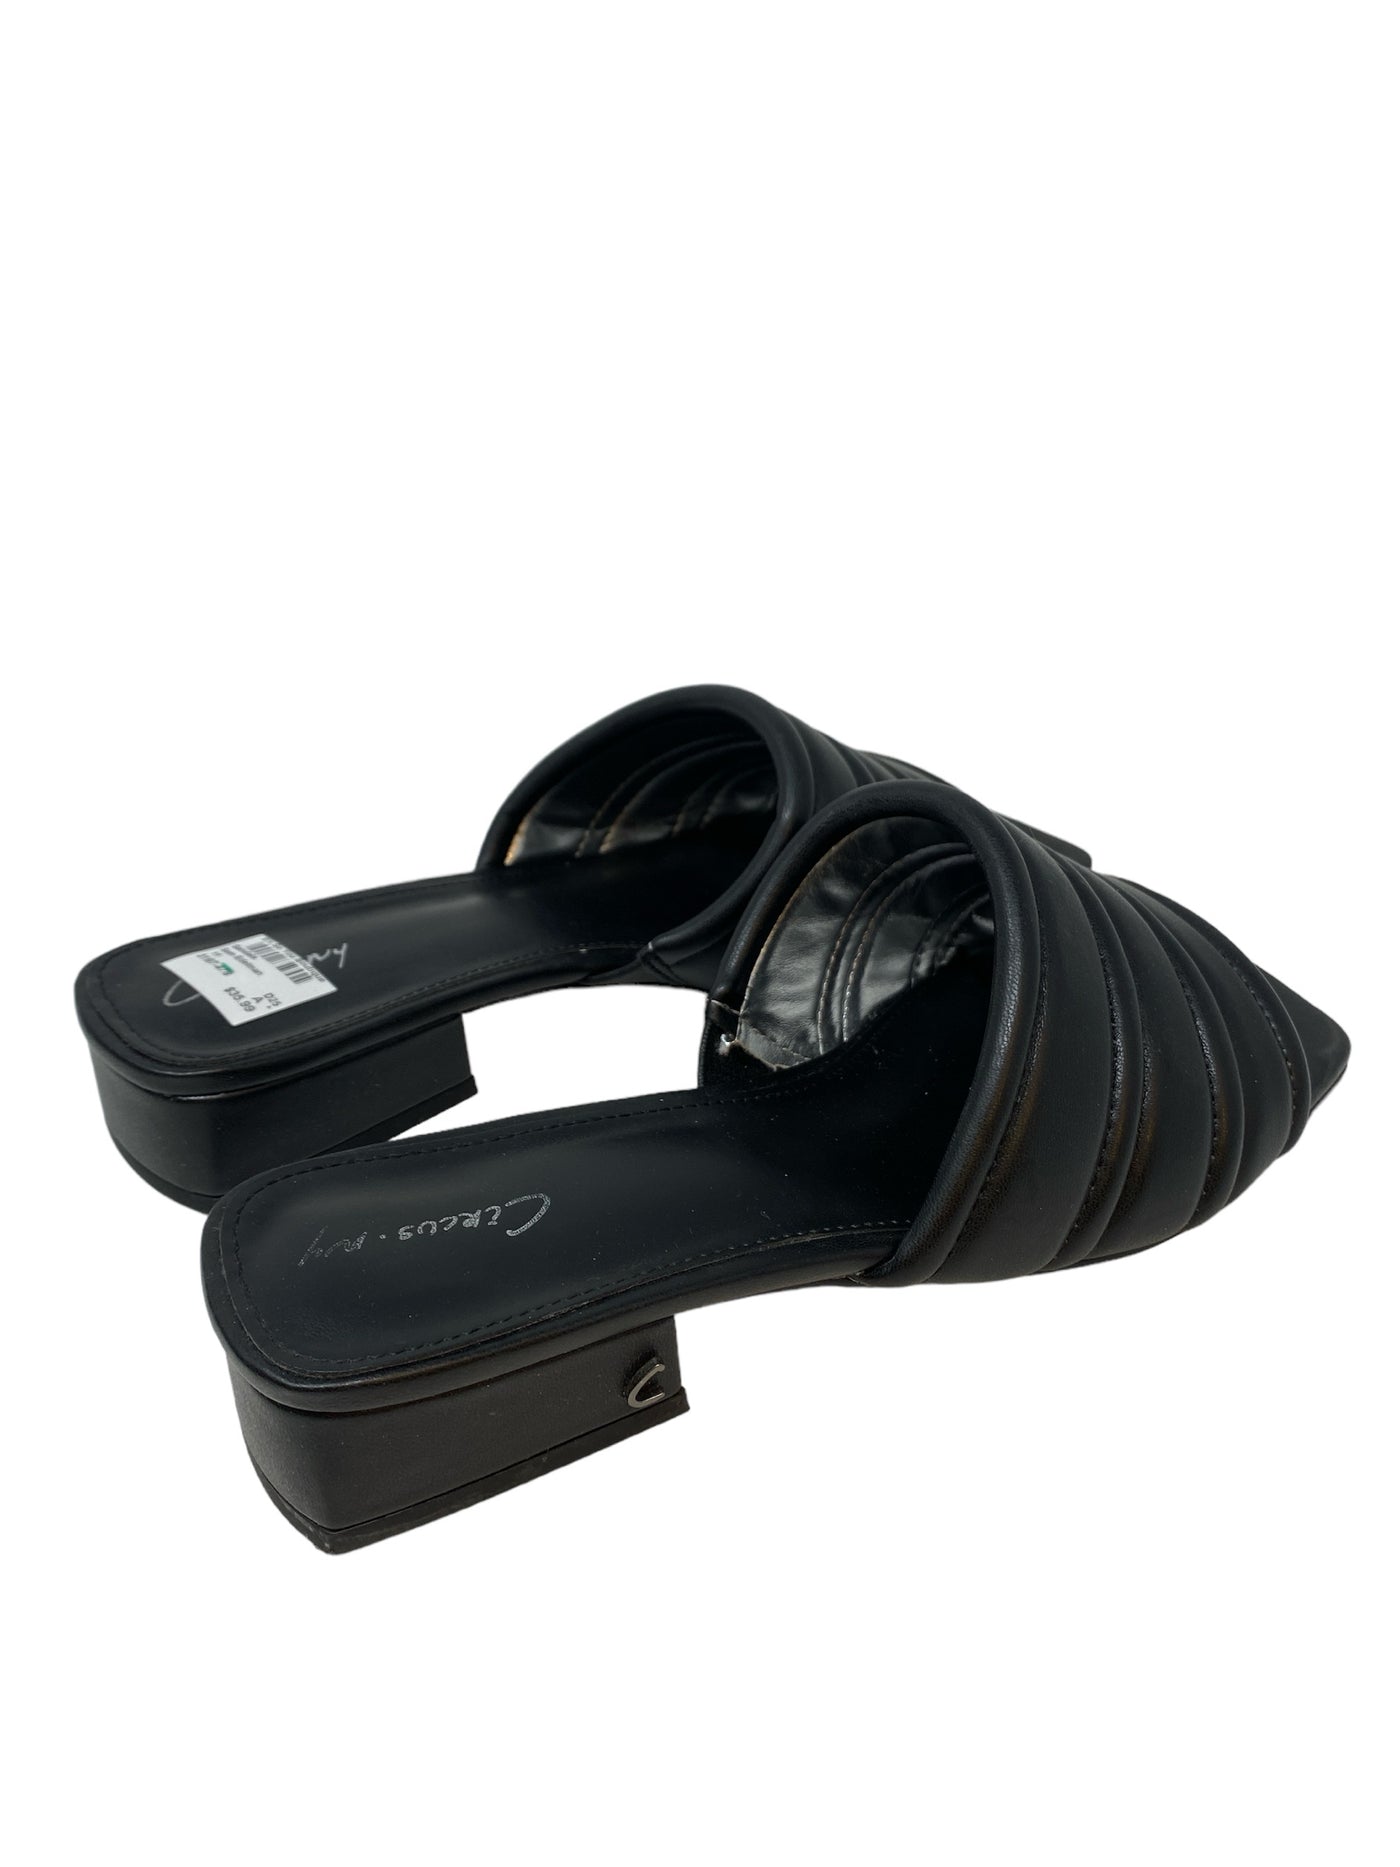 Sam Edelman Women Size 11 Black Sandals